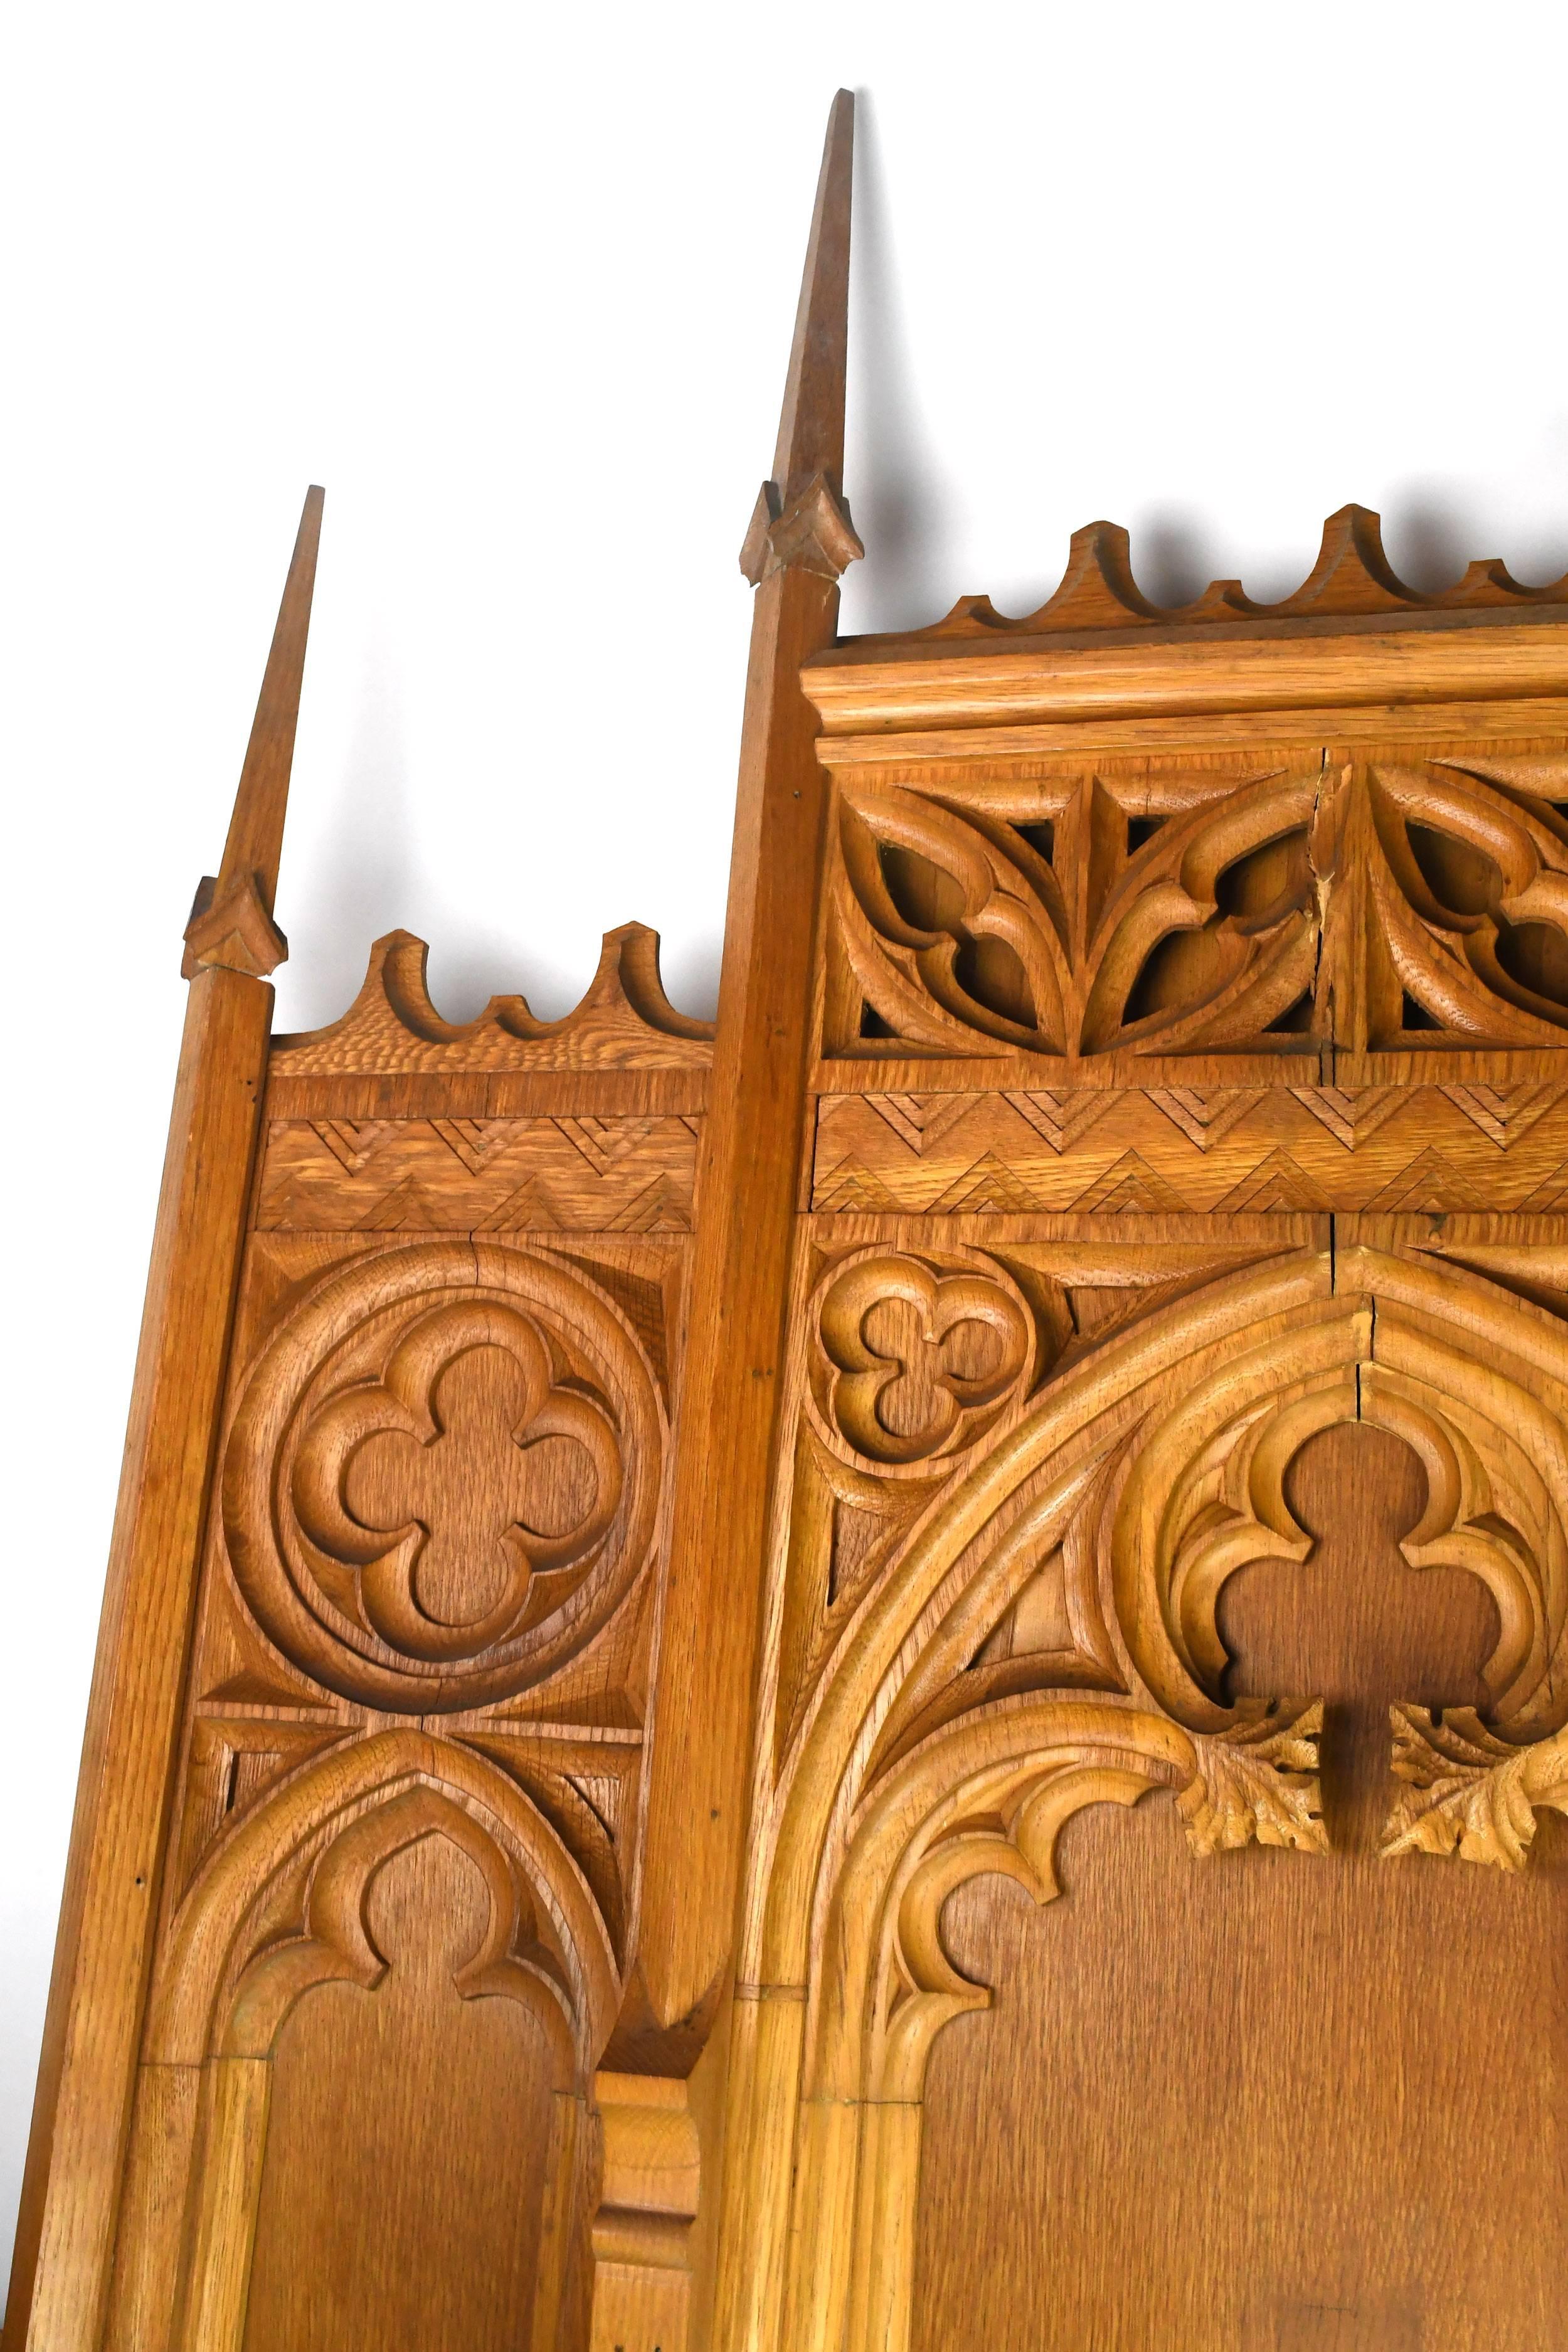 American Gothic Oak Altarpiece with Deco Details